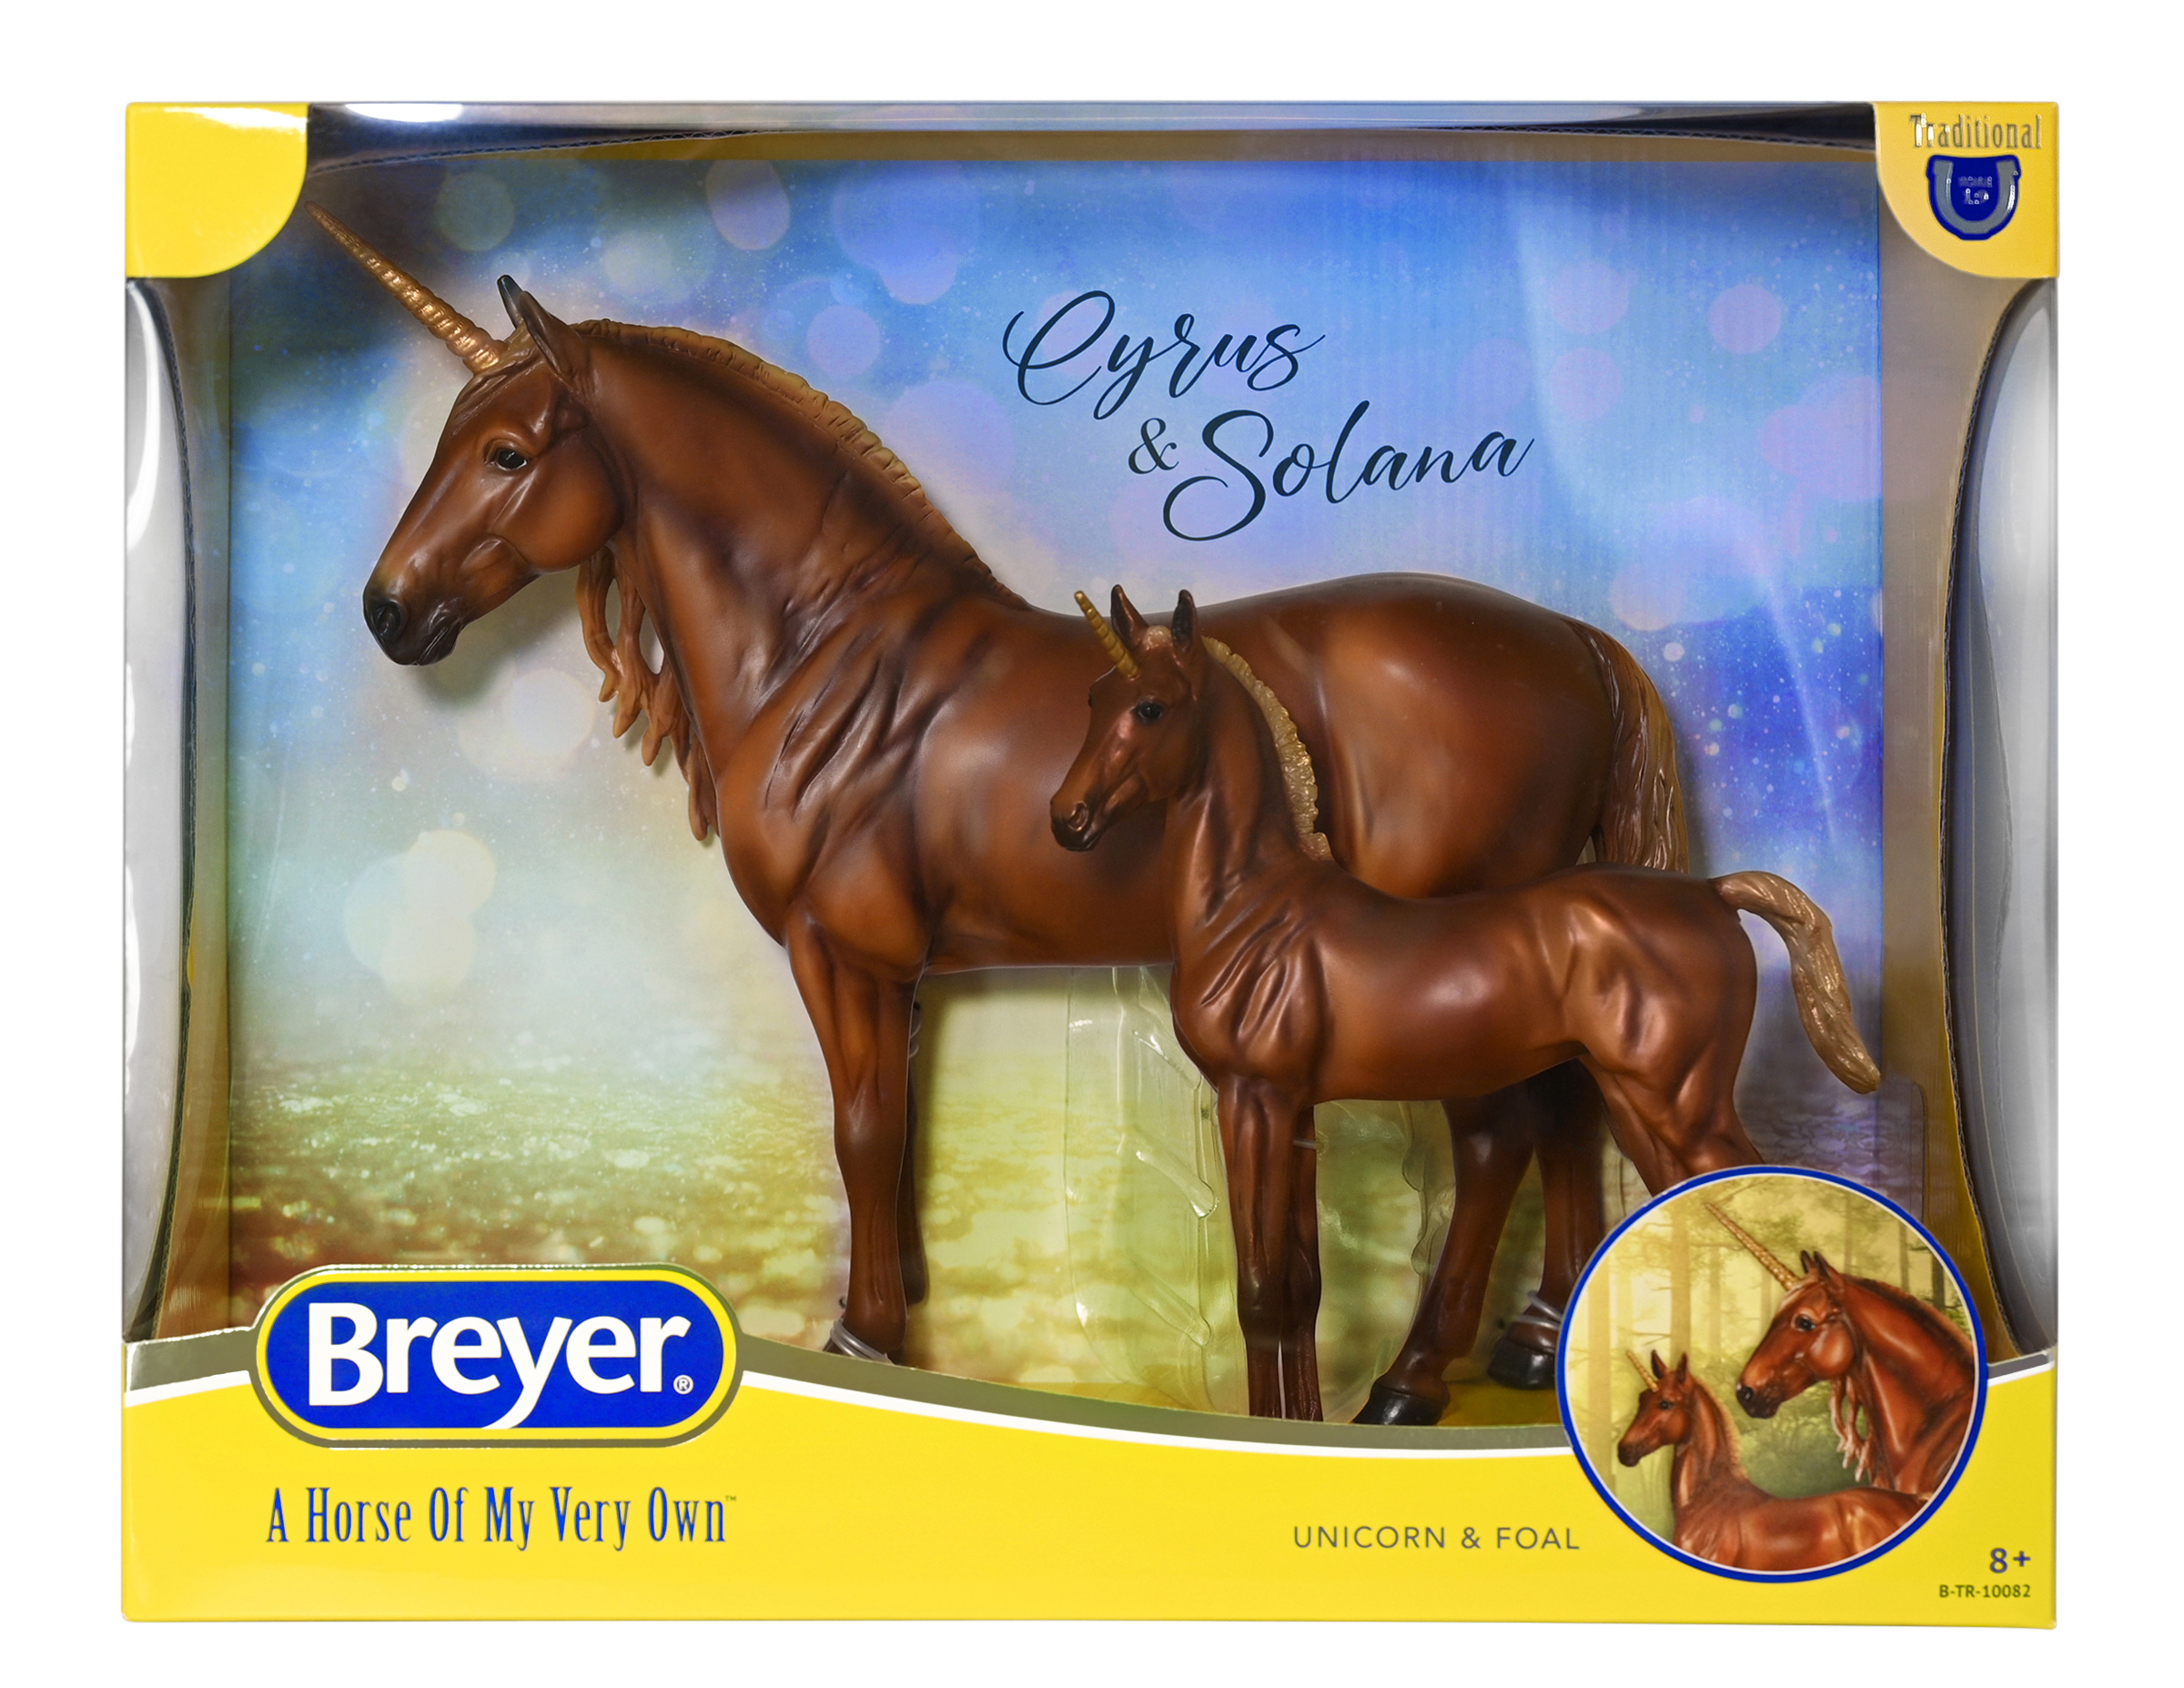 Breyer Cyrus & Solana Unicorn set #BTR10082